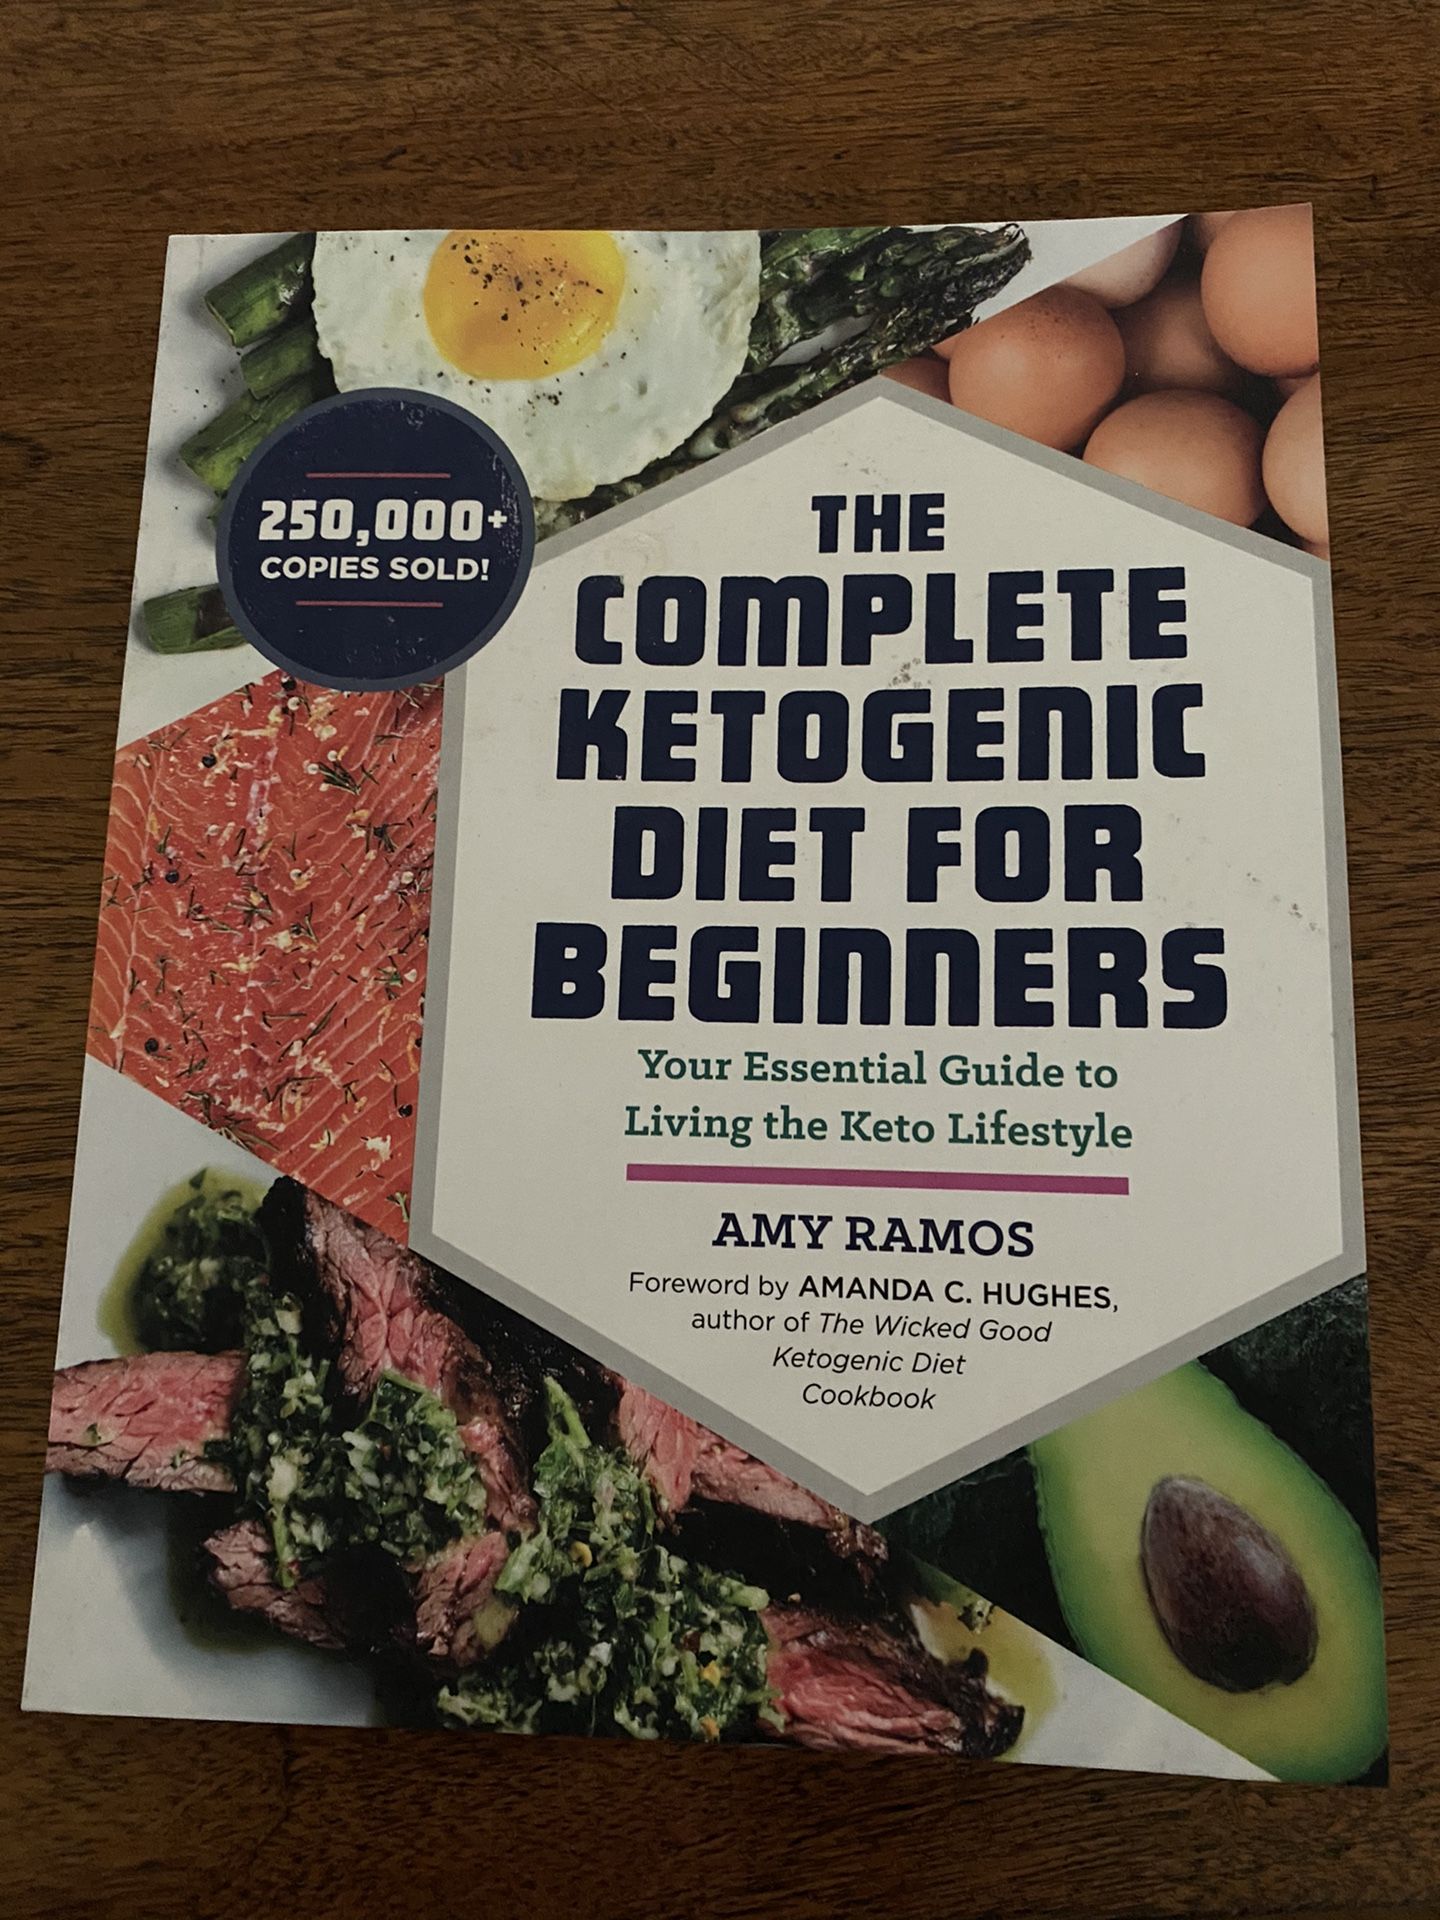 Brand new keto book/recipes